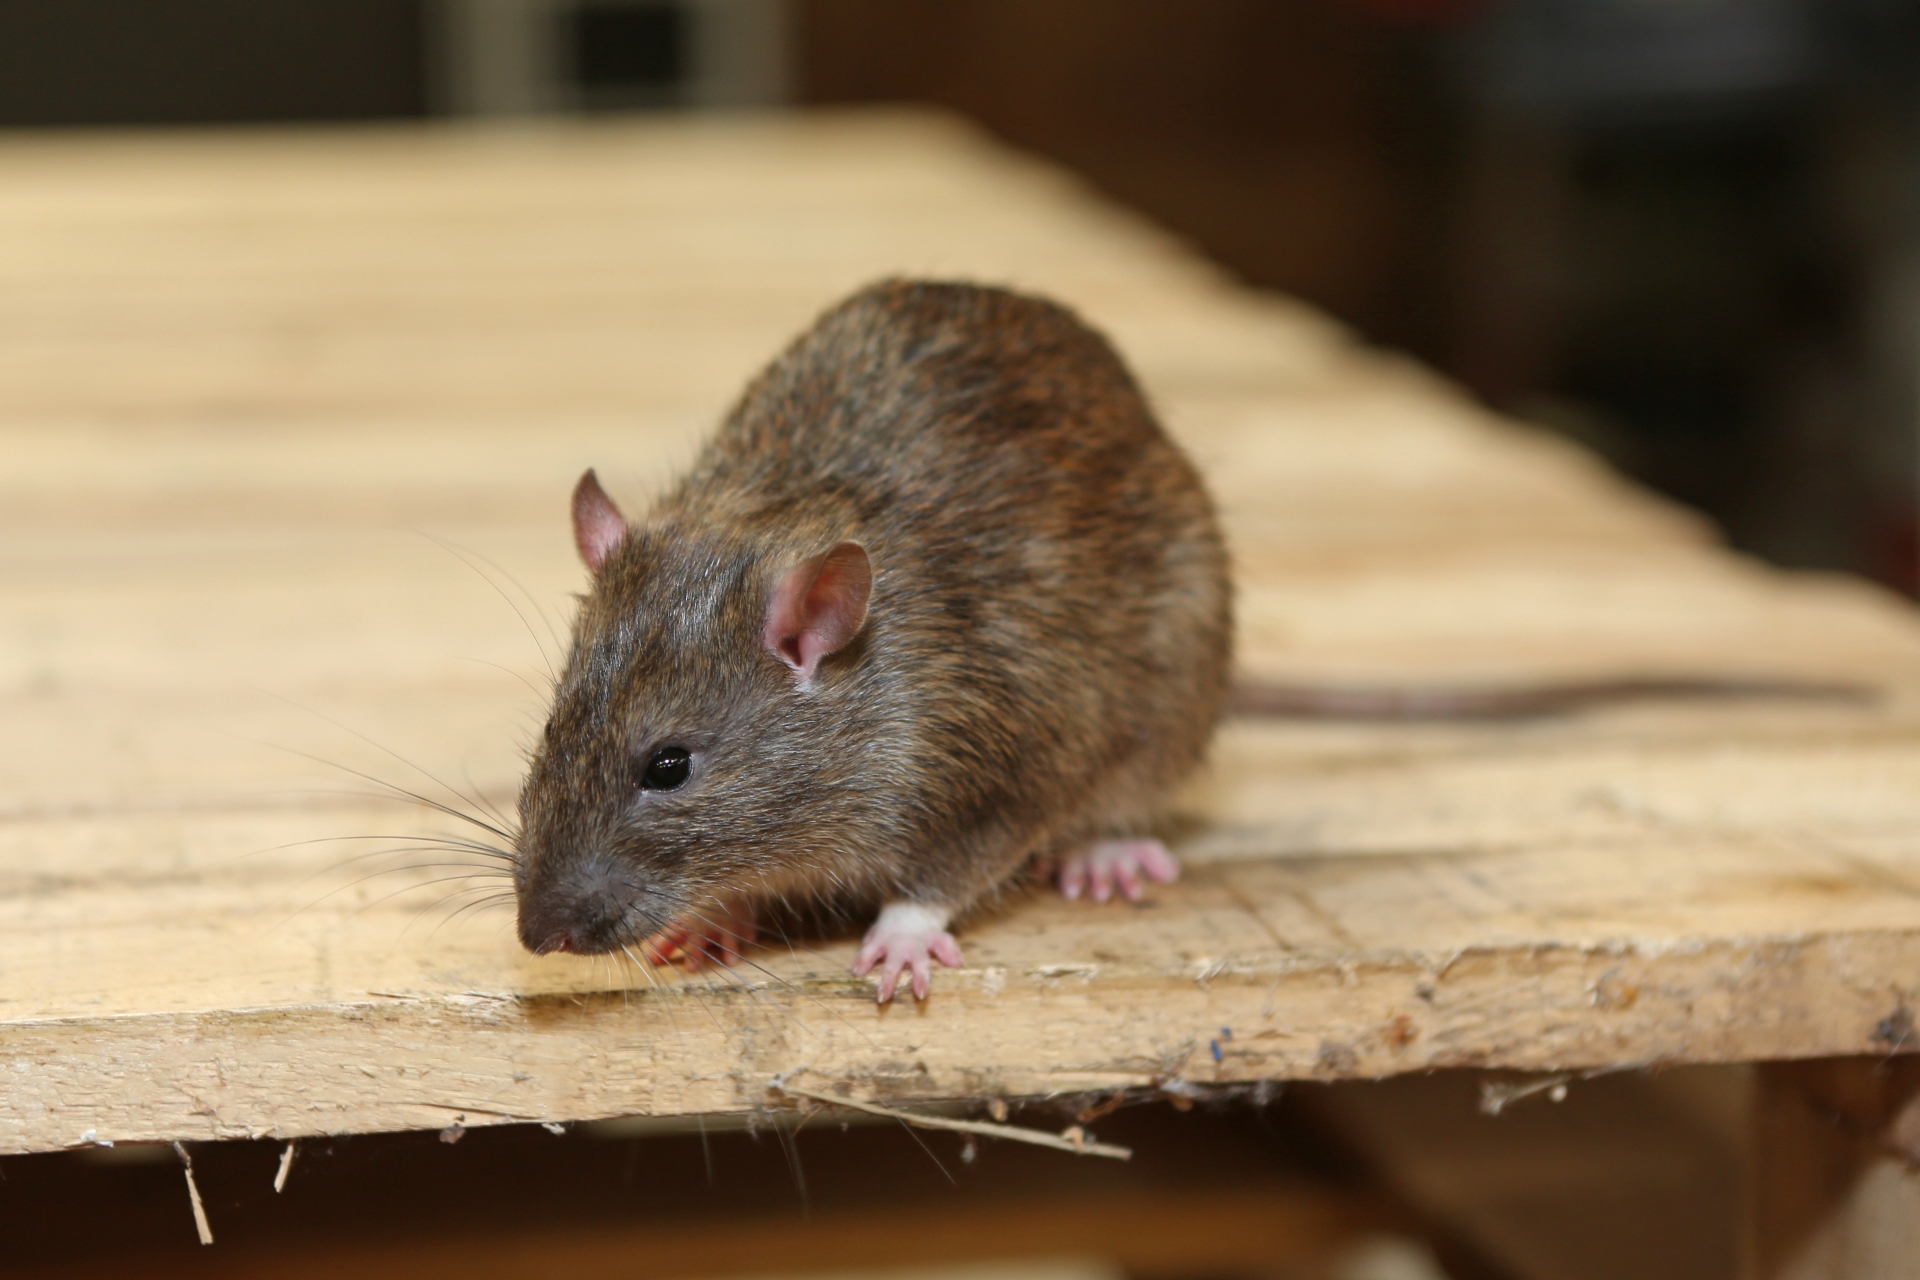 Rat extermination, Pest Control in Raynes Park, South Wimbledon, SW20. Call Now 020 8166 9746